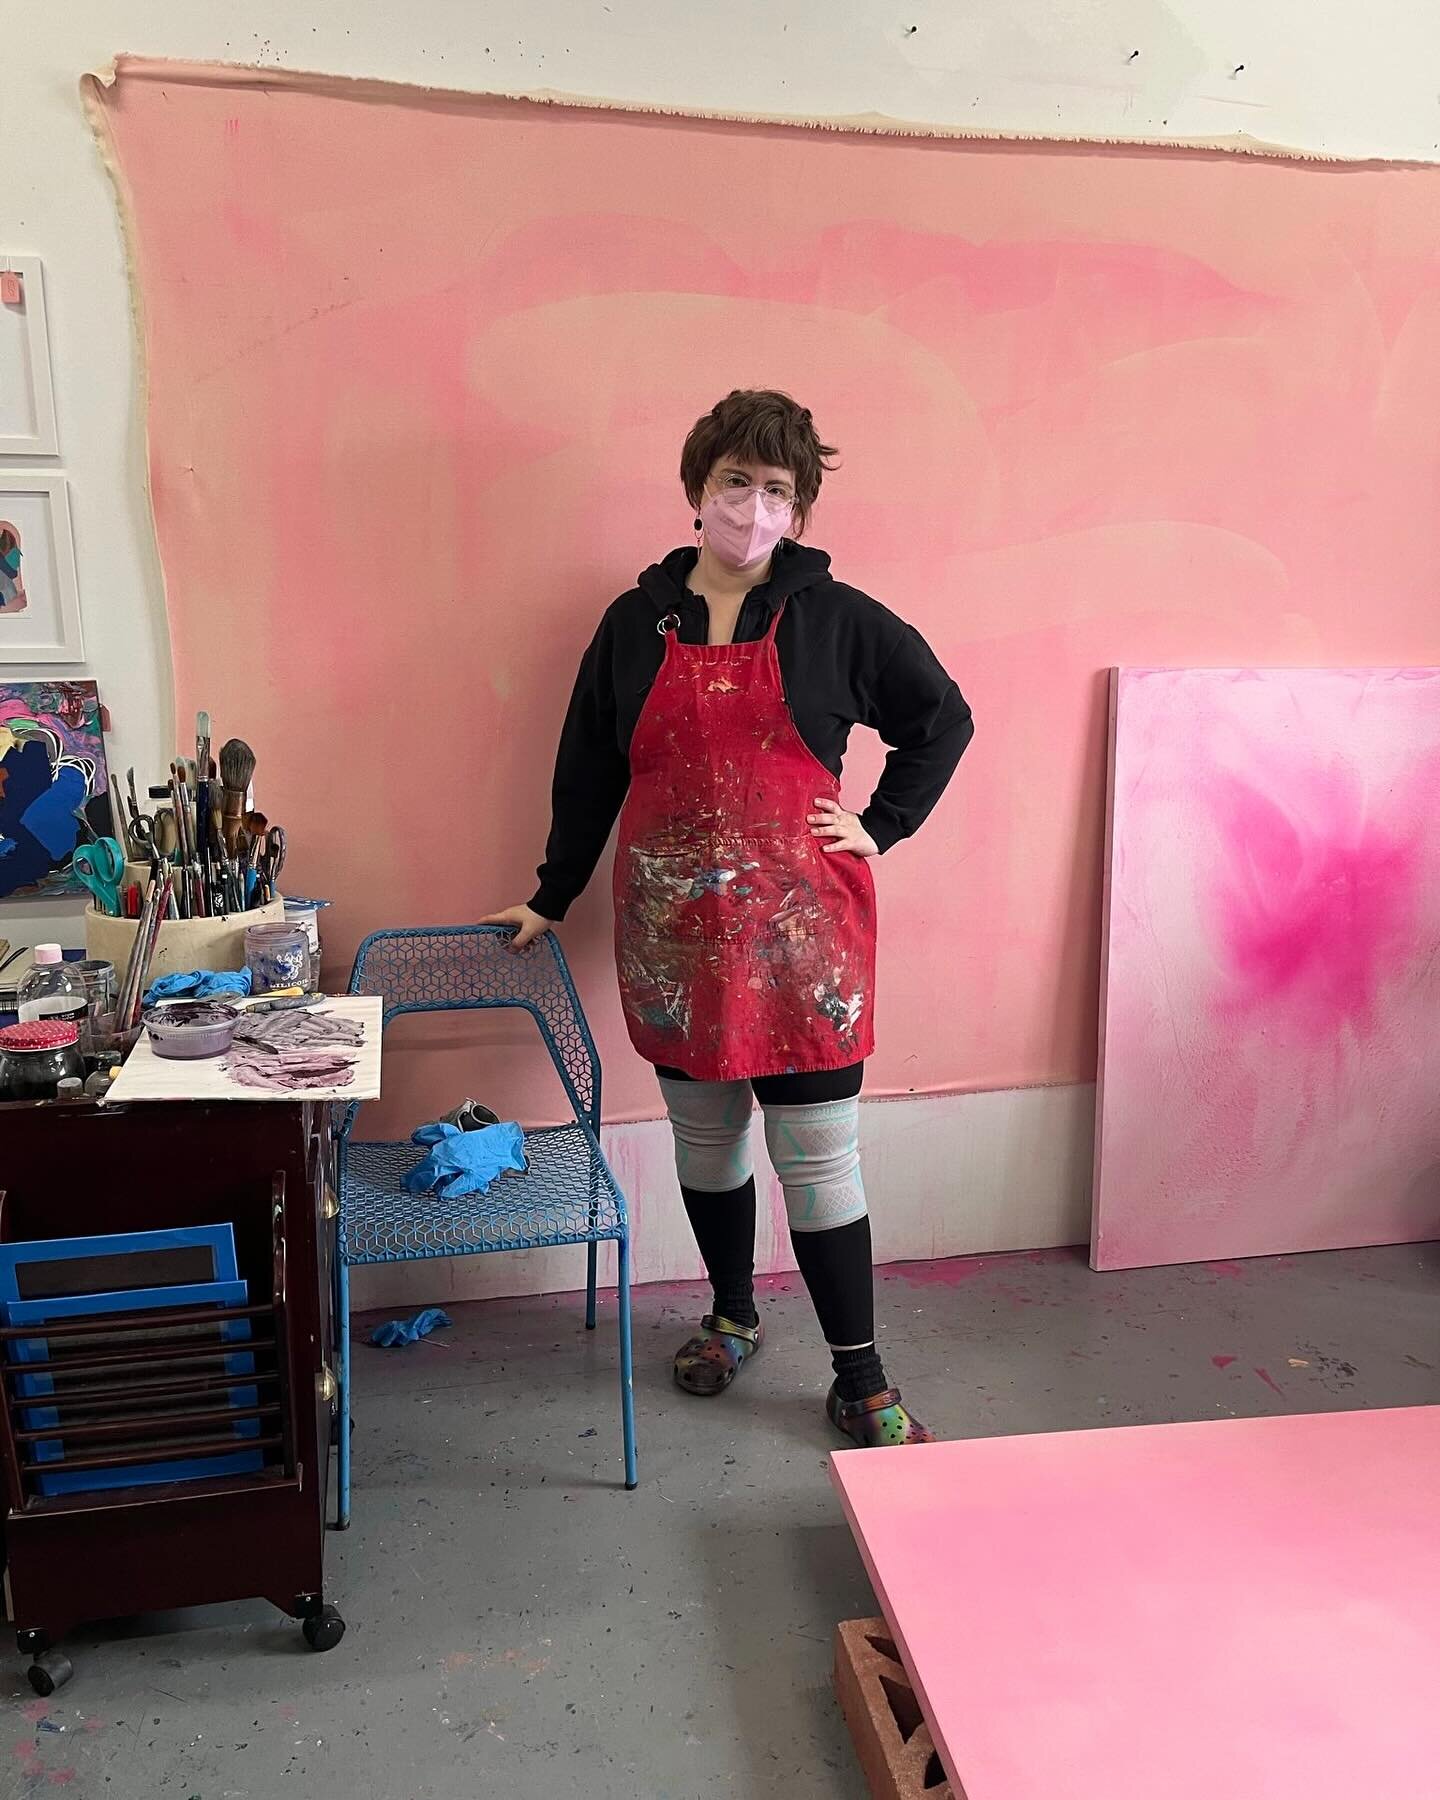 Best part of February open studios was talking with a 4 year old about how awesome the color pink is 💕

#californiabuilding #nemaamn #art #artstudio #pink #pinkaesthetic #mplsart #artistsoninstagram #artwork #minneapolis #nemplsartsdistrict #smallbu